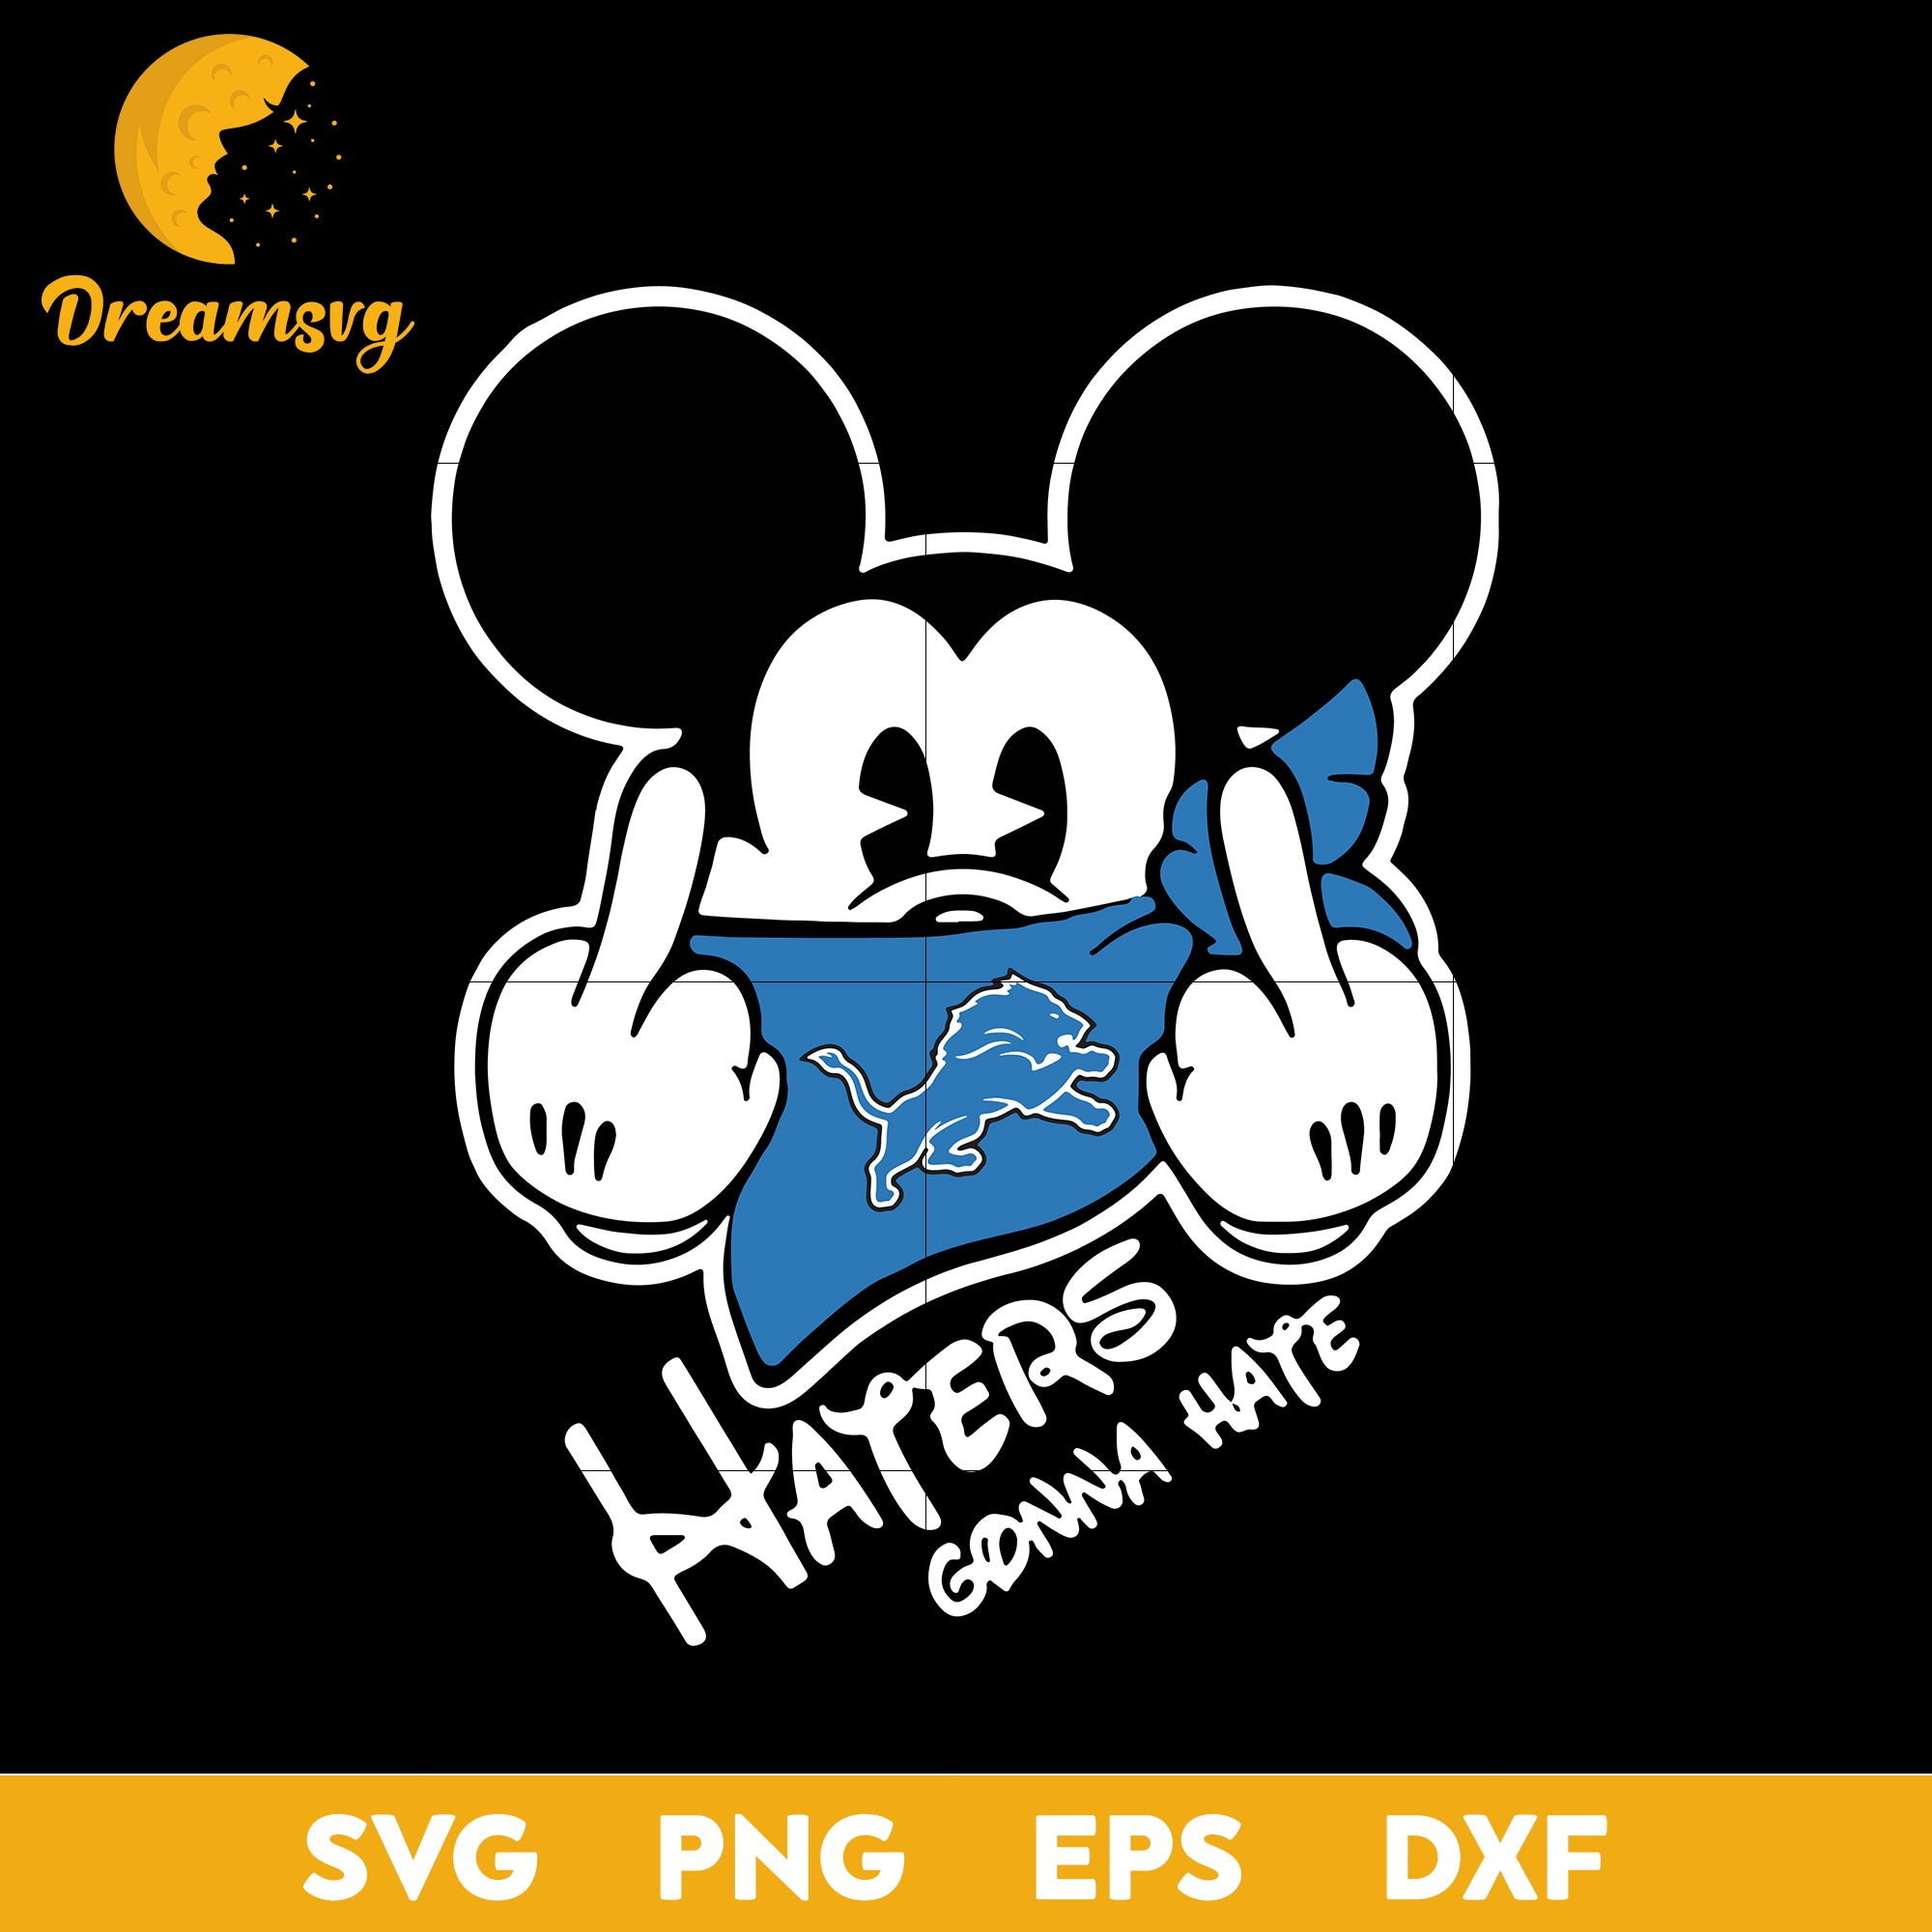 Detroit Lions, Mickey, Haters Gonna Hate Svg, Nfl Svg, Png, Dxf, Eps Digital File.